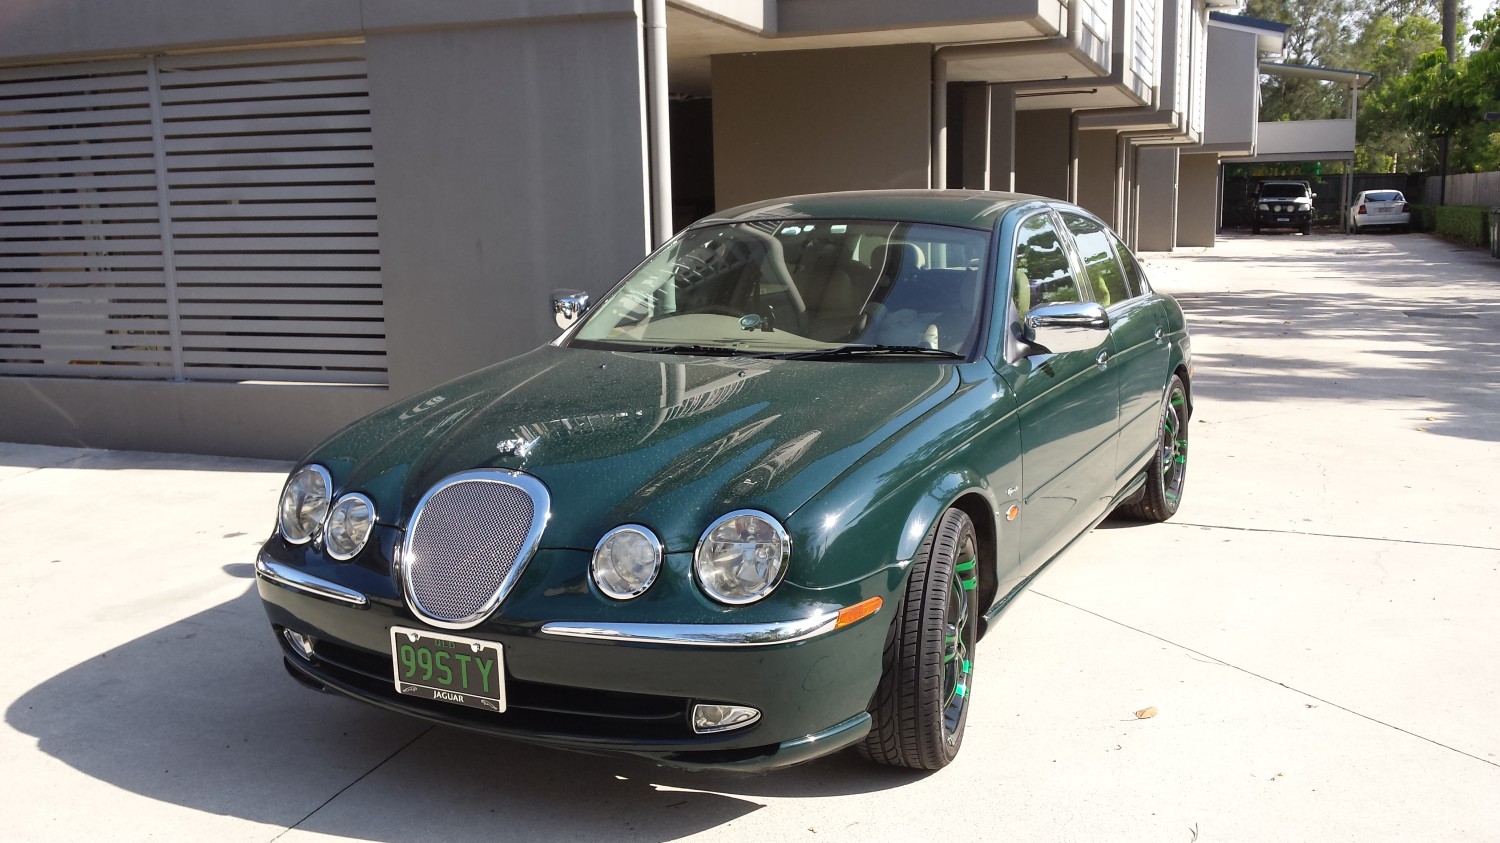 1999 Jaguar S Type